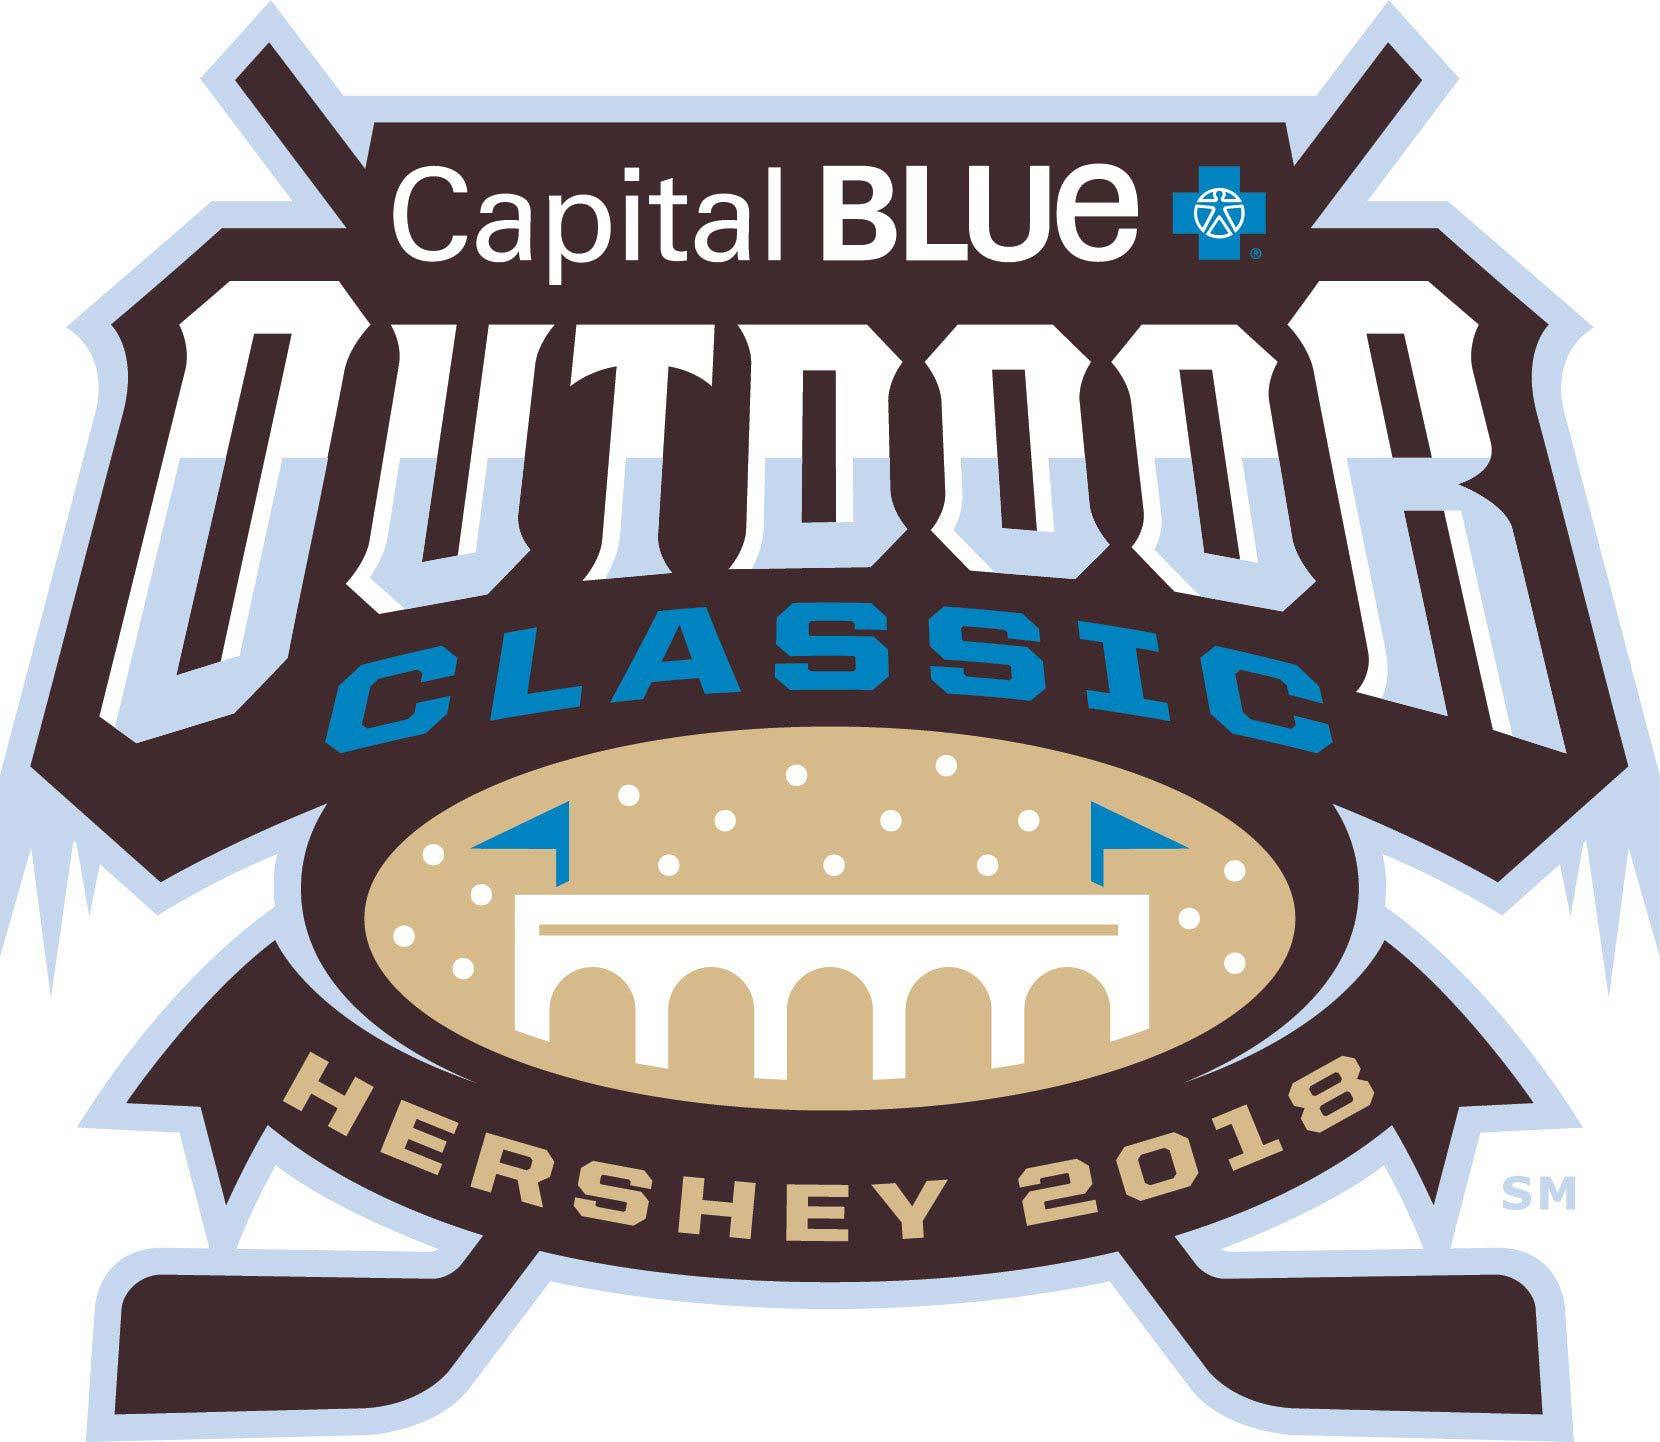 Hershey Bears New Logo - Hershey Bears reveal logo for 2018 Capital BlueCross Outdoor Classic